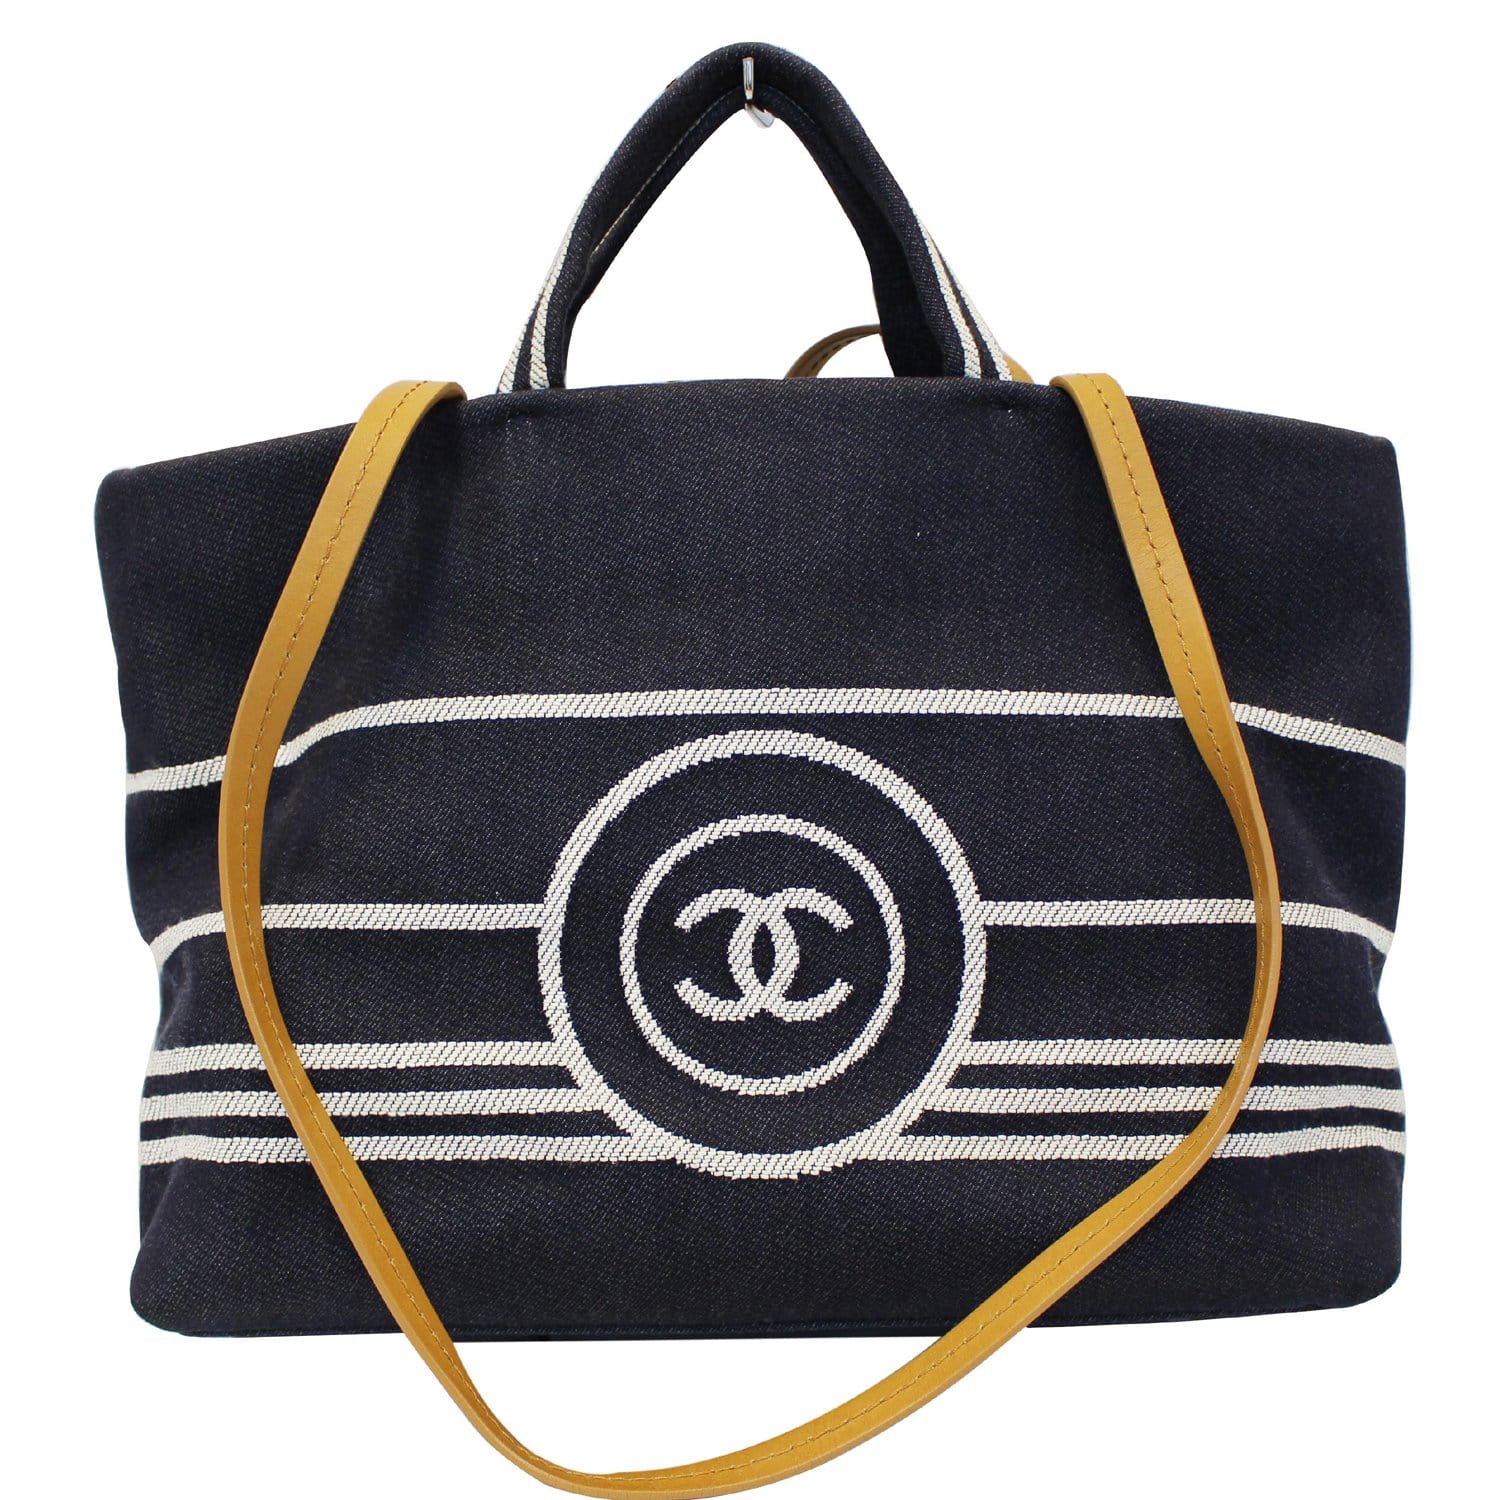 Chanel Denim Shopping Bag Hot Sale, SAVE 51%.